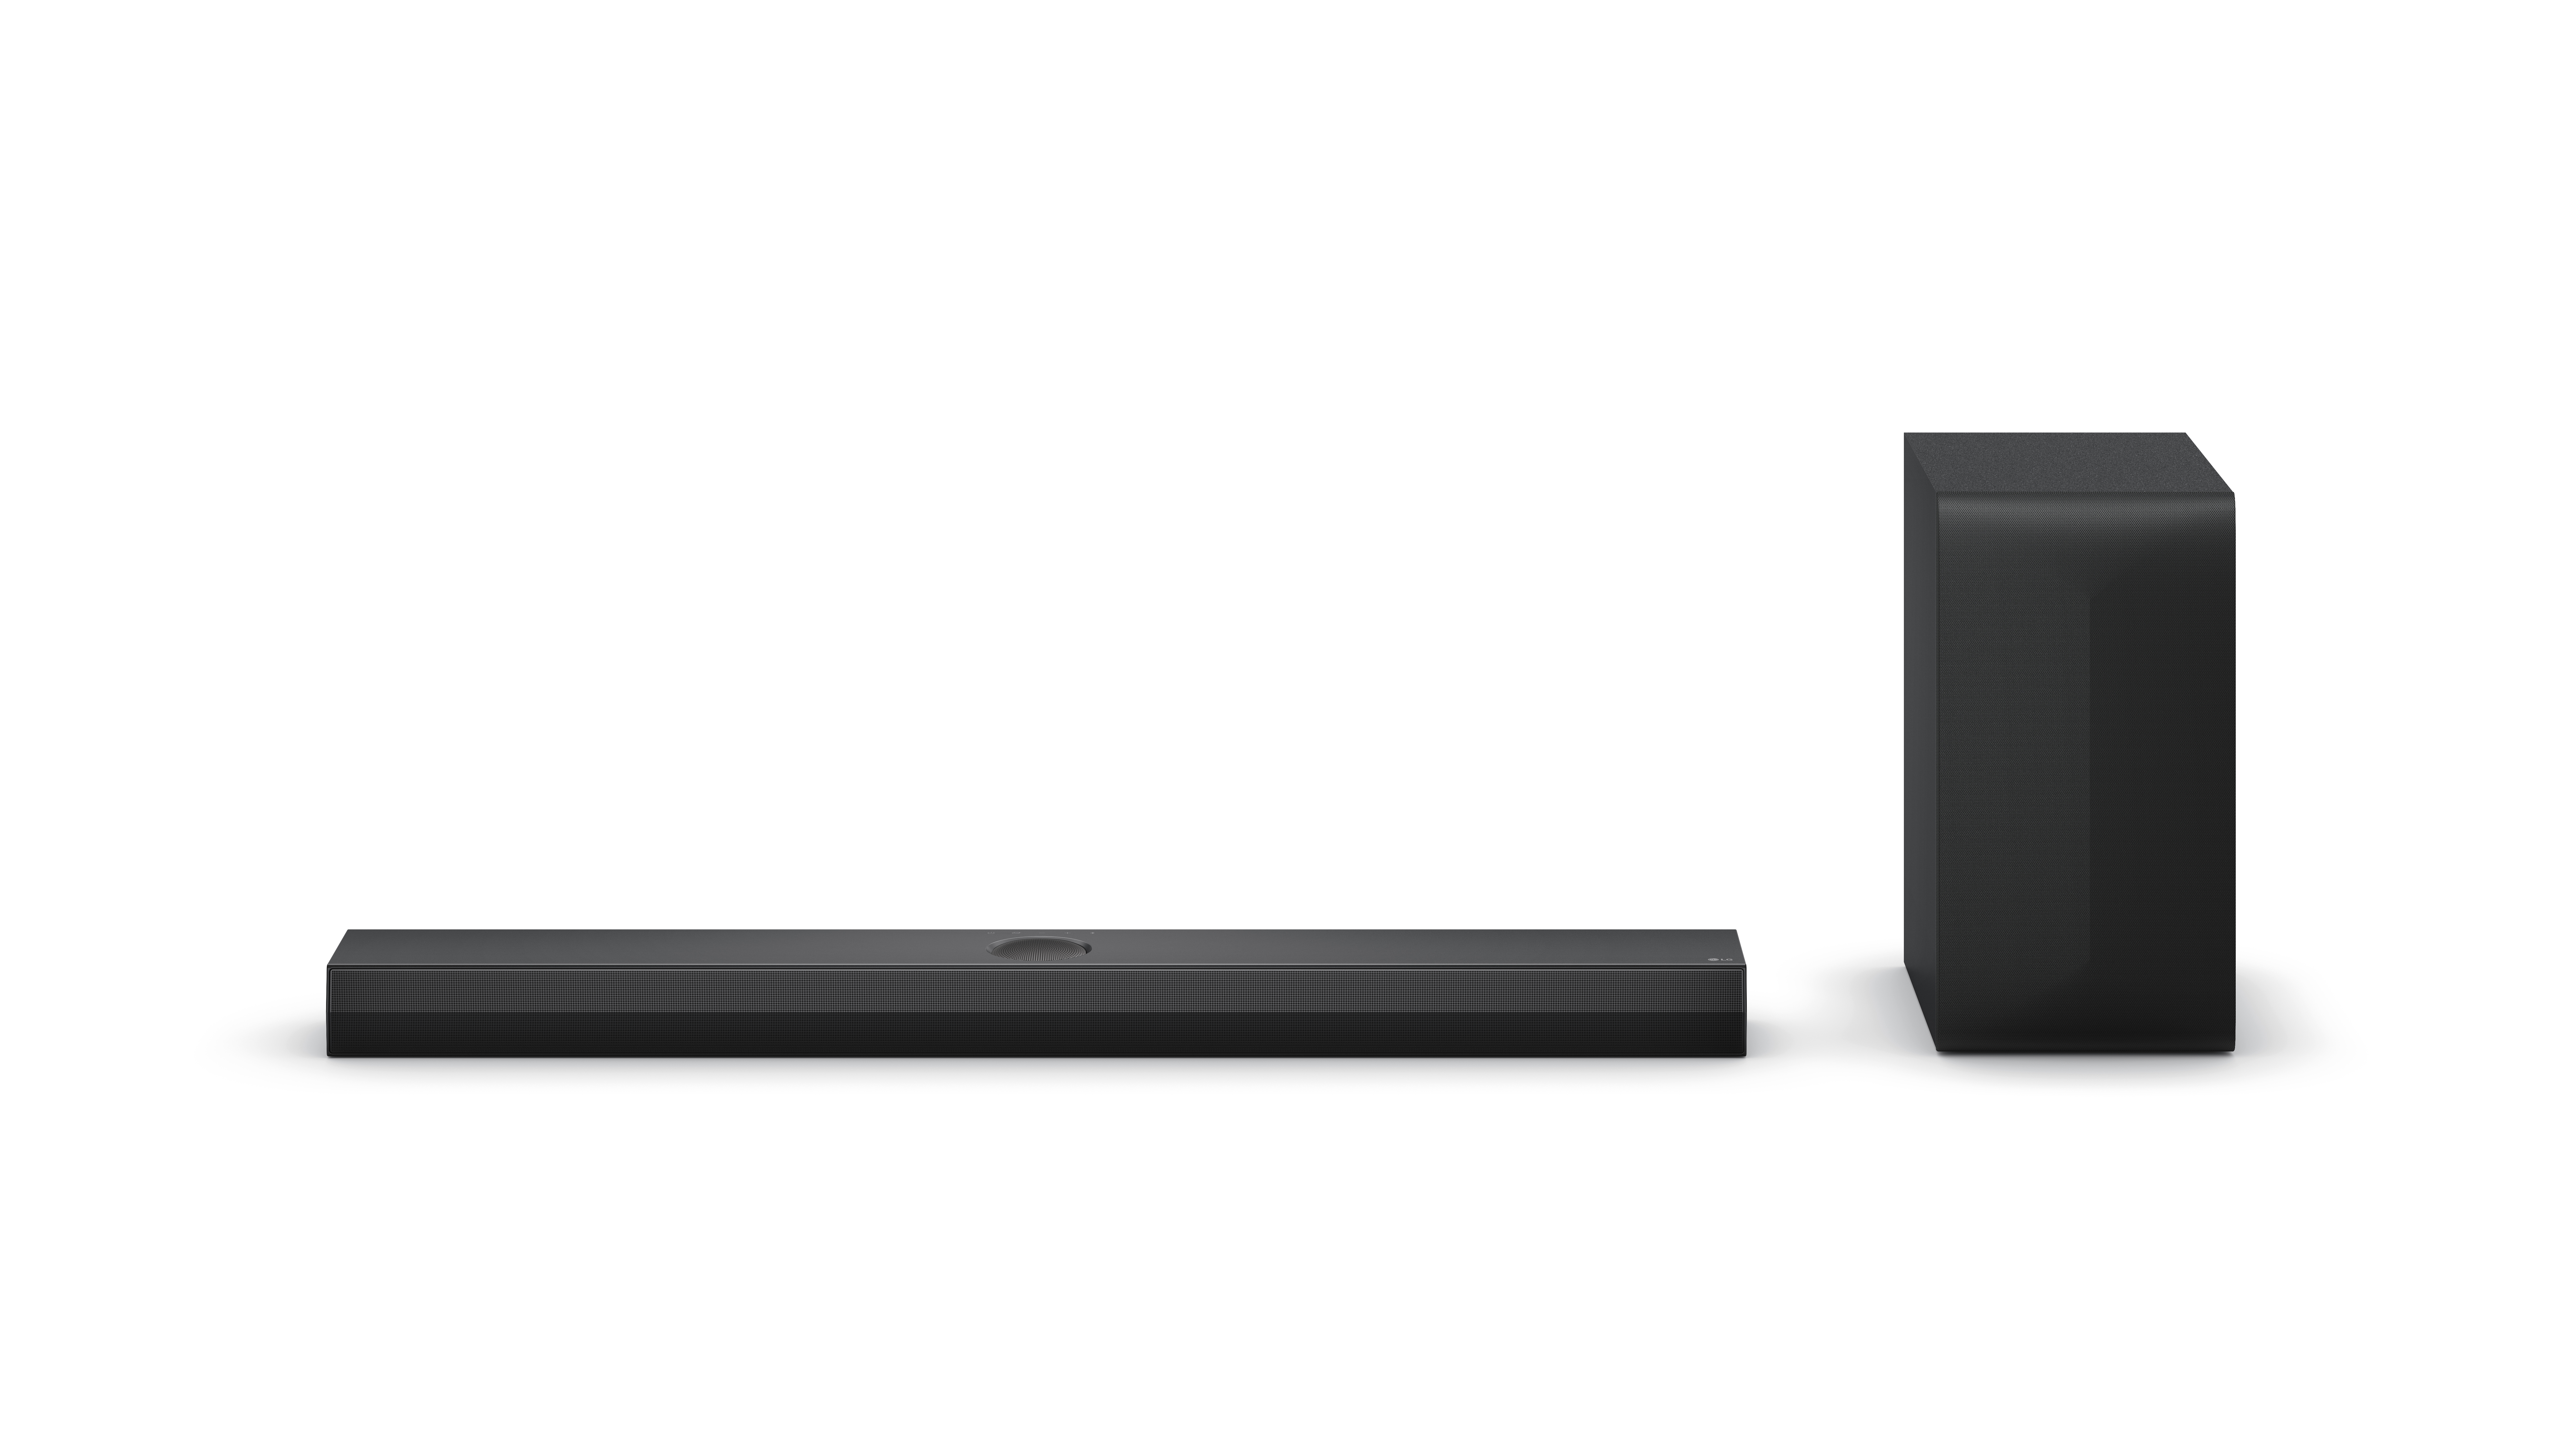 70 und günstig Kaufen-LG DS70TY 3.1.1 Dolby Atmos Soundbar, 400 Watt Subwoofer schwarz. LG DS70TY 3.1.1 Dolby Atmos Soundbar, 400 Watt Subwoofer schwarz <![CDATA[• 3.1.1 Dolby Atmos Soundbar mit 400 Watt • Center Upfiring Speaker in Soundbar • Dolby Atmos Music • Empfo